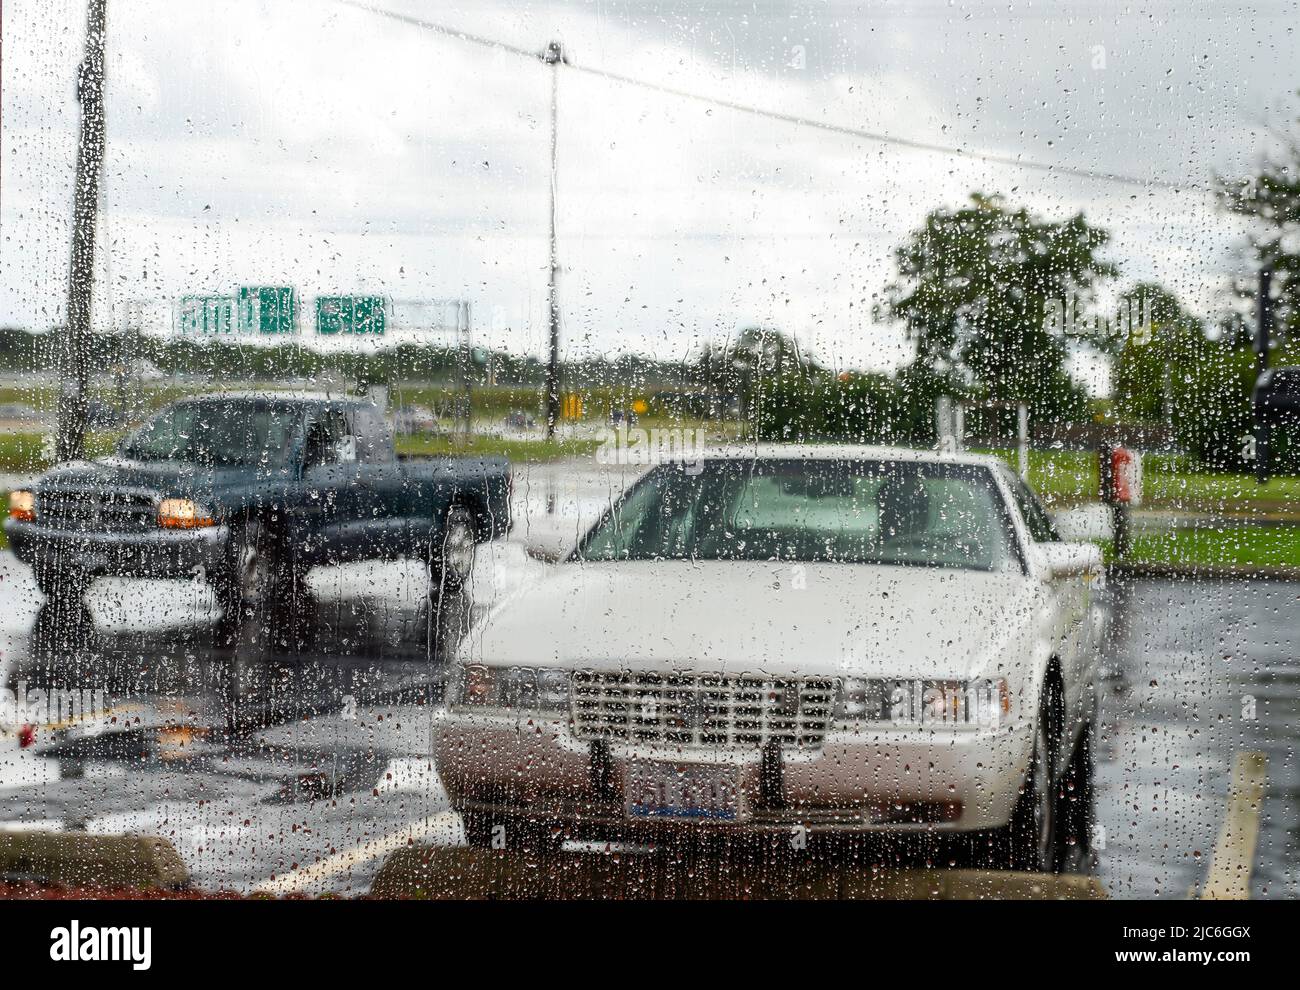 USA Illinois, parking lot of Fast Food restaurant during rain Stock Photo